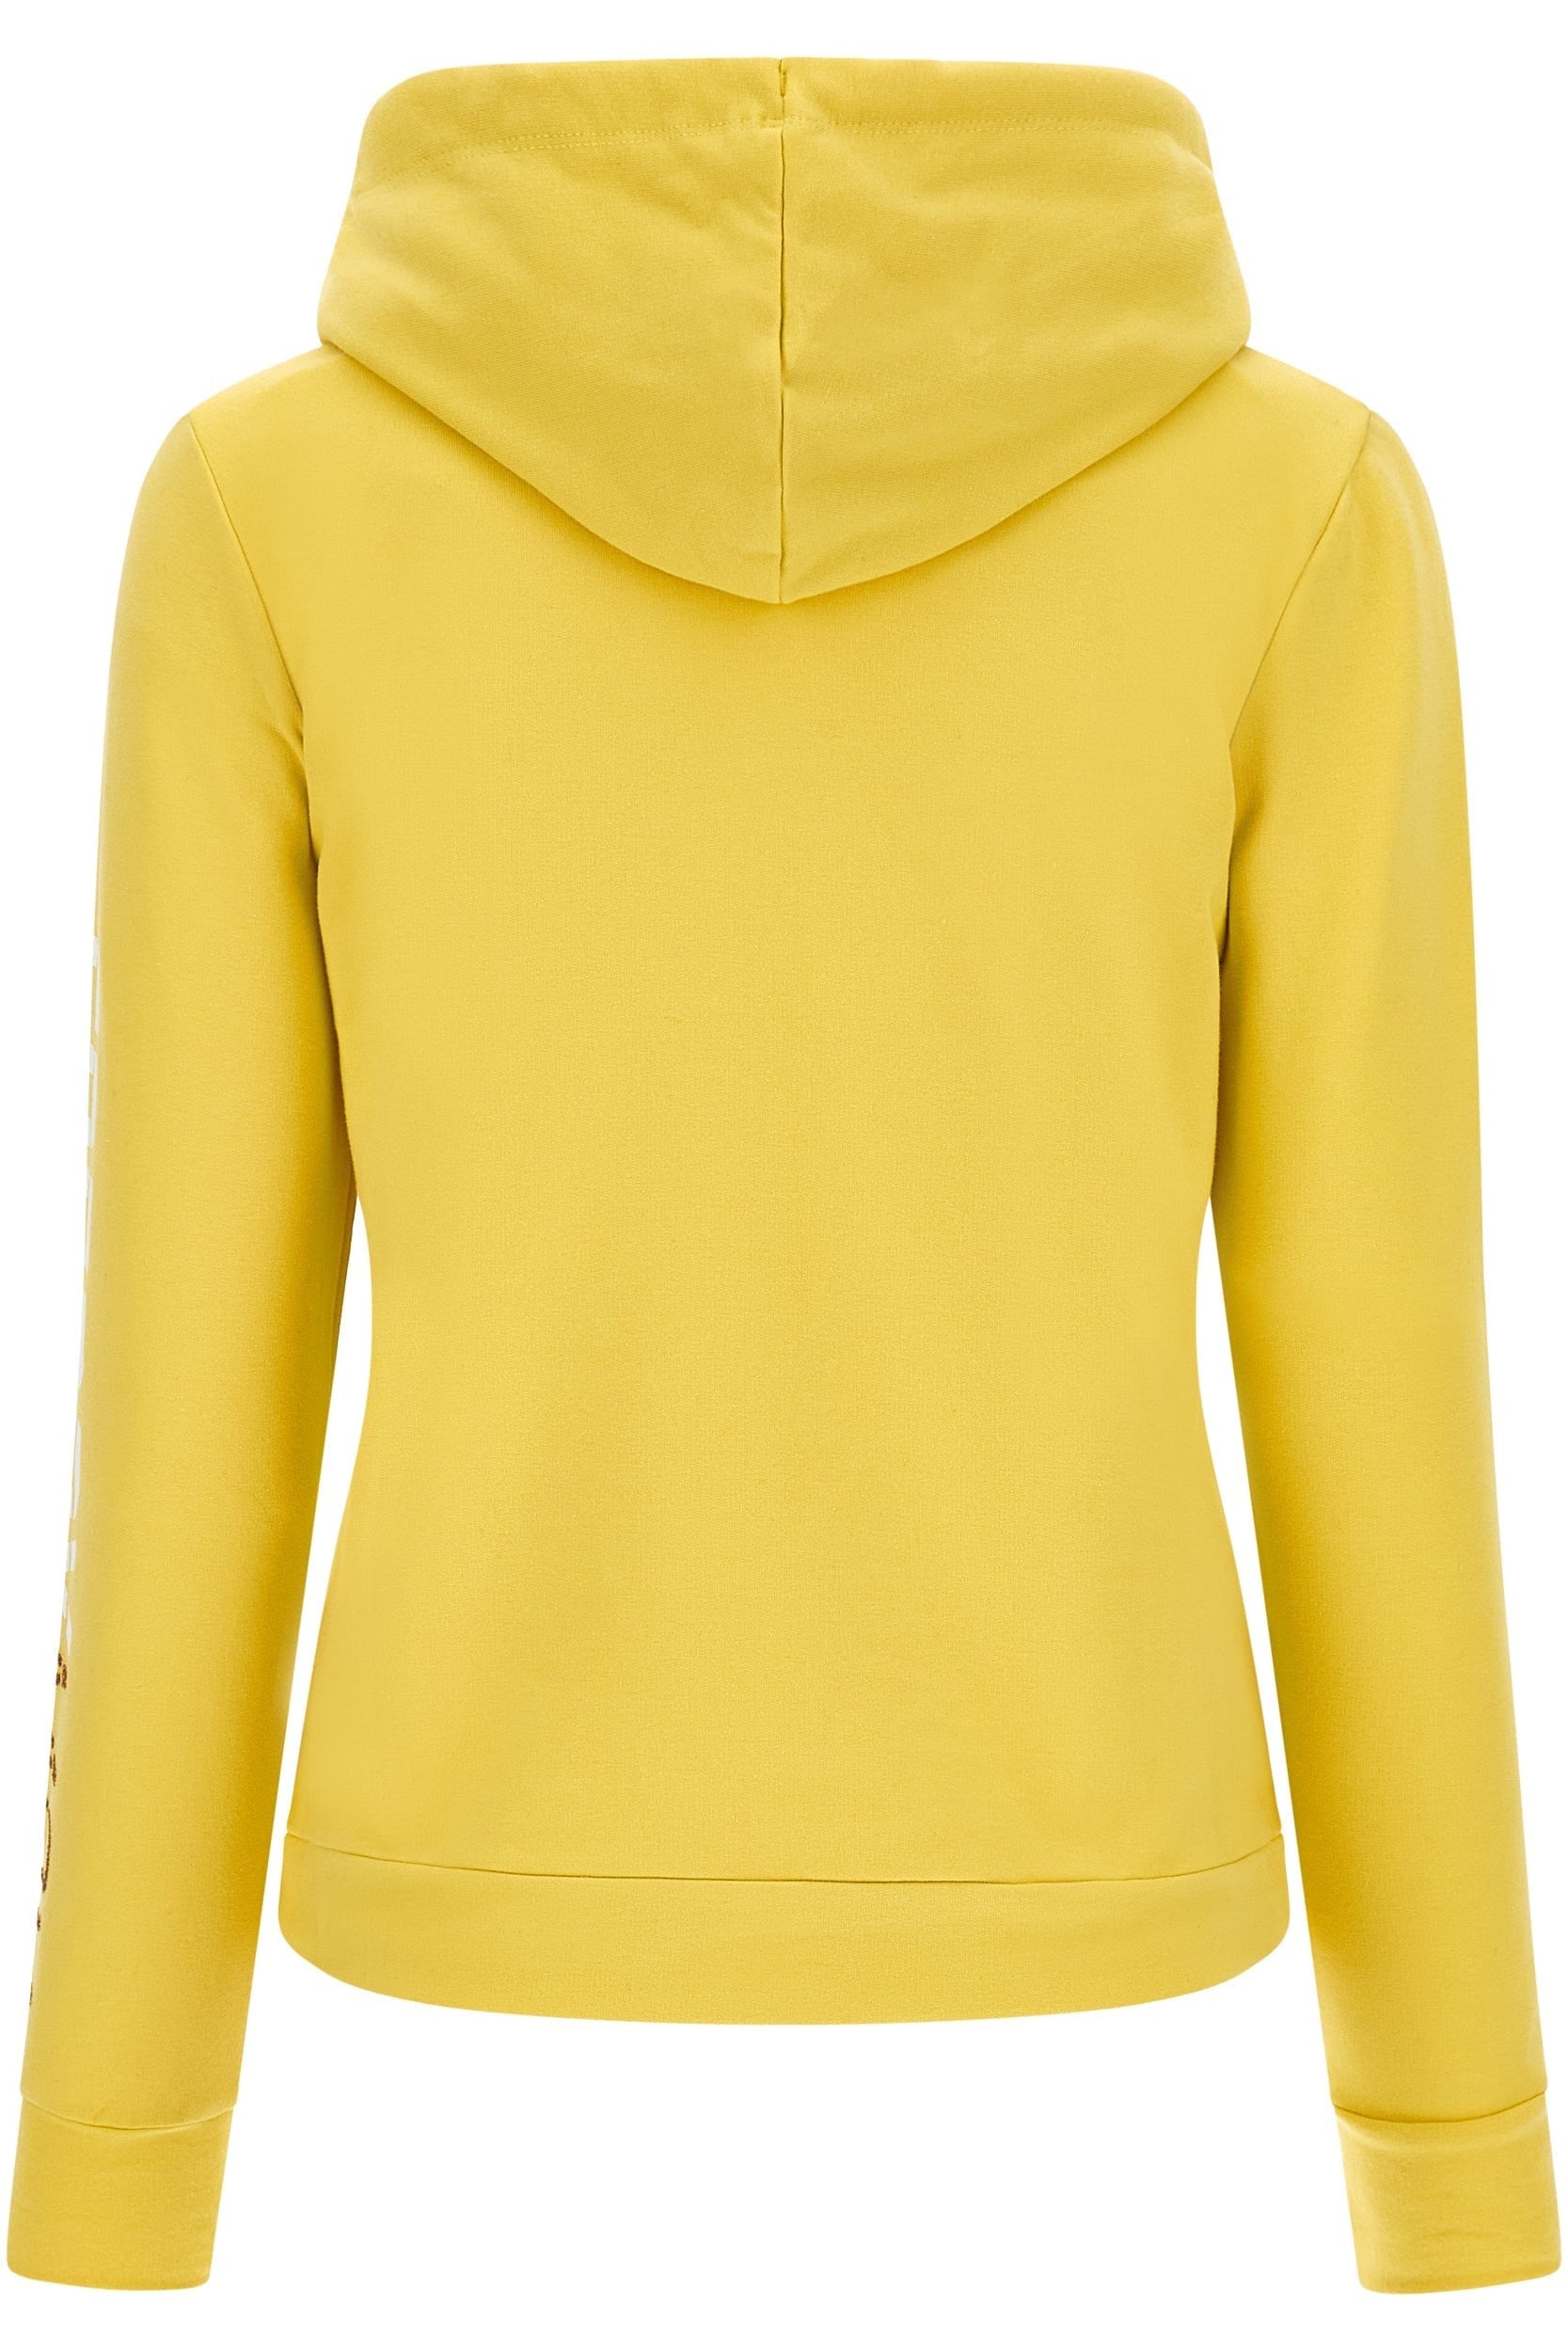 Sweatshirt with hood - Yellow + Gold glitter details 2